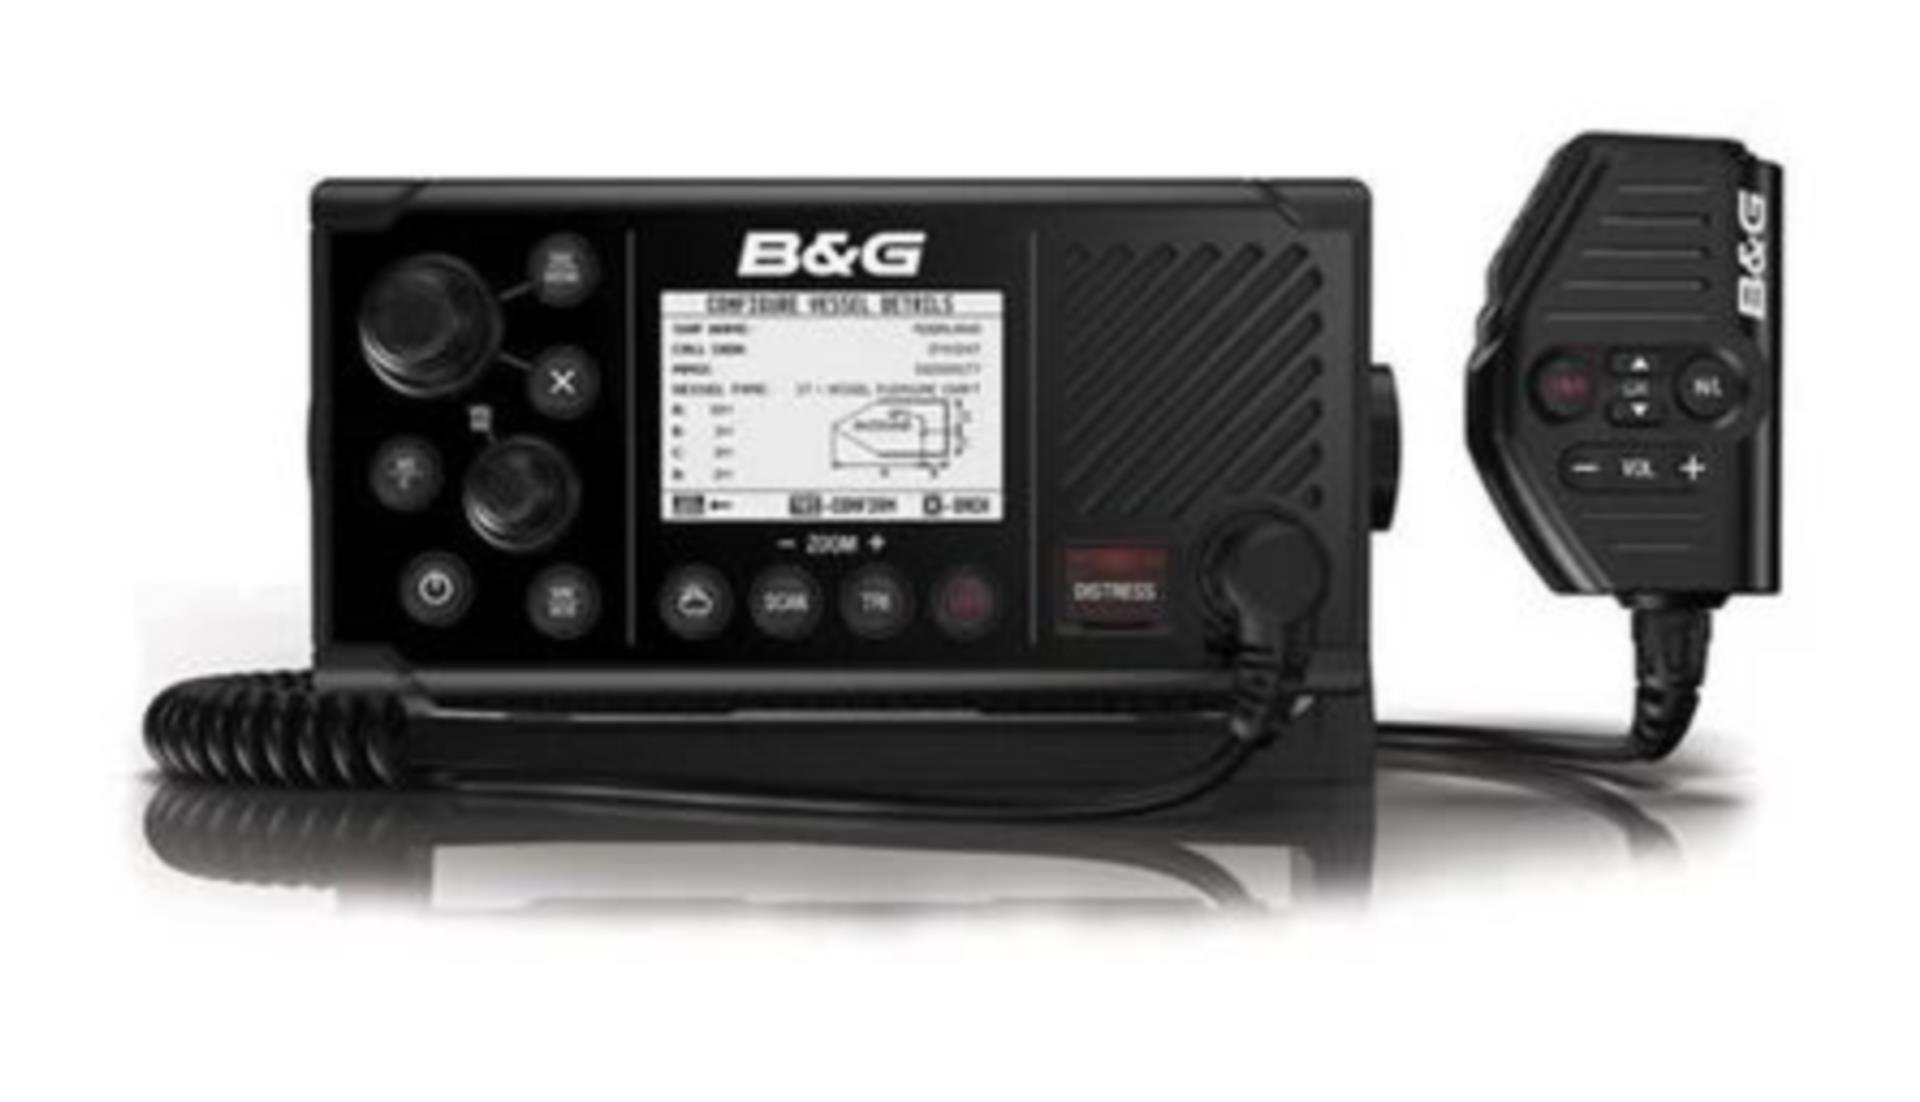 B&G V60-B UKW-Funkgerät mit AIS Klasse B Transceiver